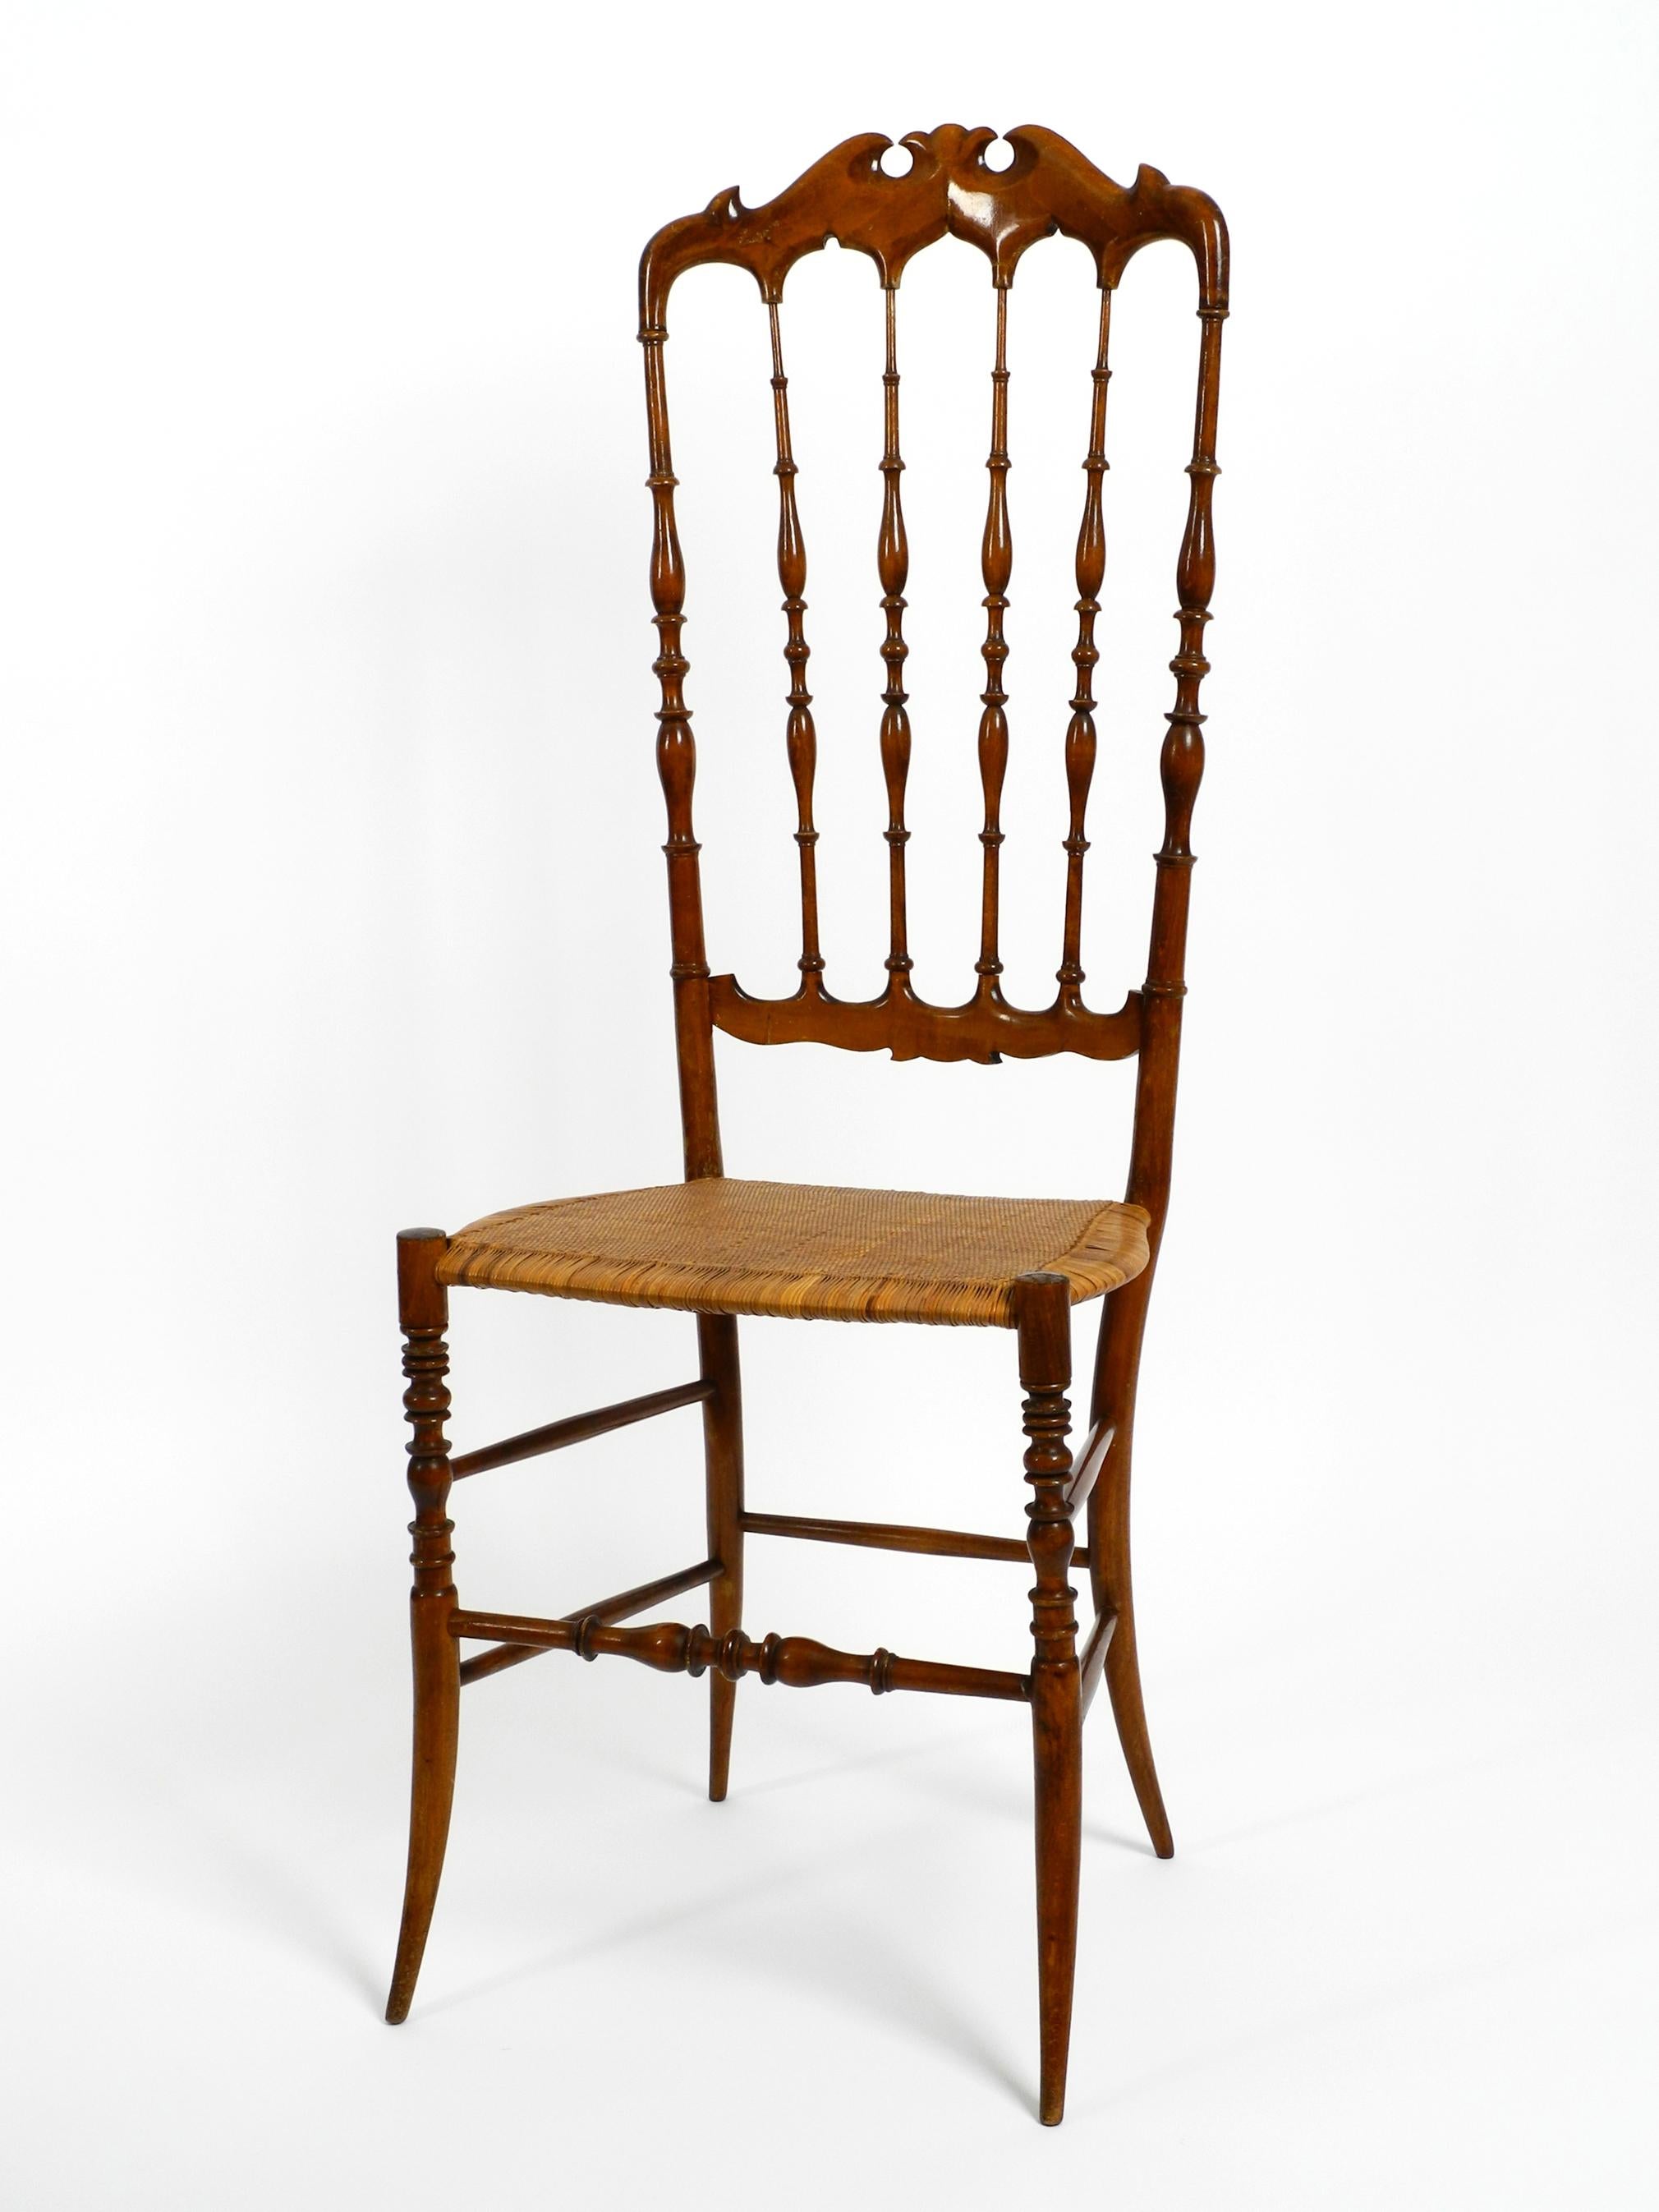 1950s Walnut Chiavari Chair Designed by Giuseppe Gaetano Descalzi 14